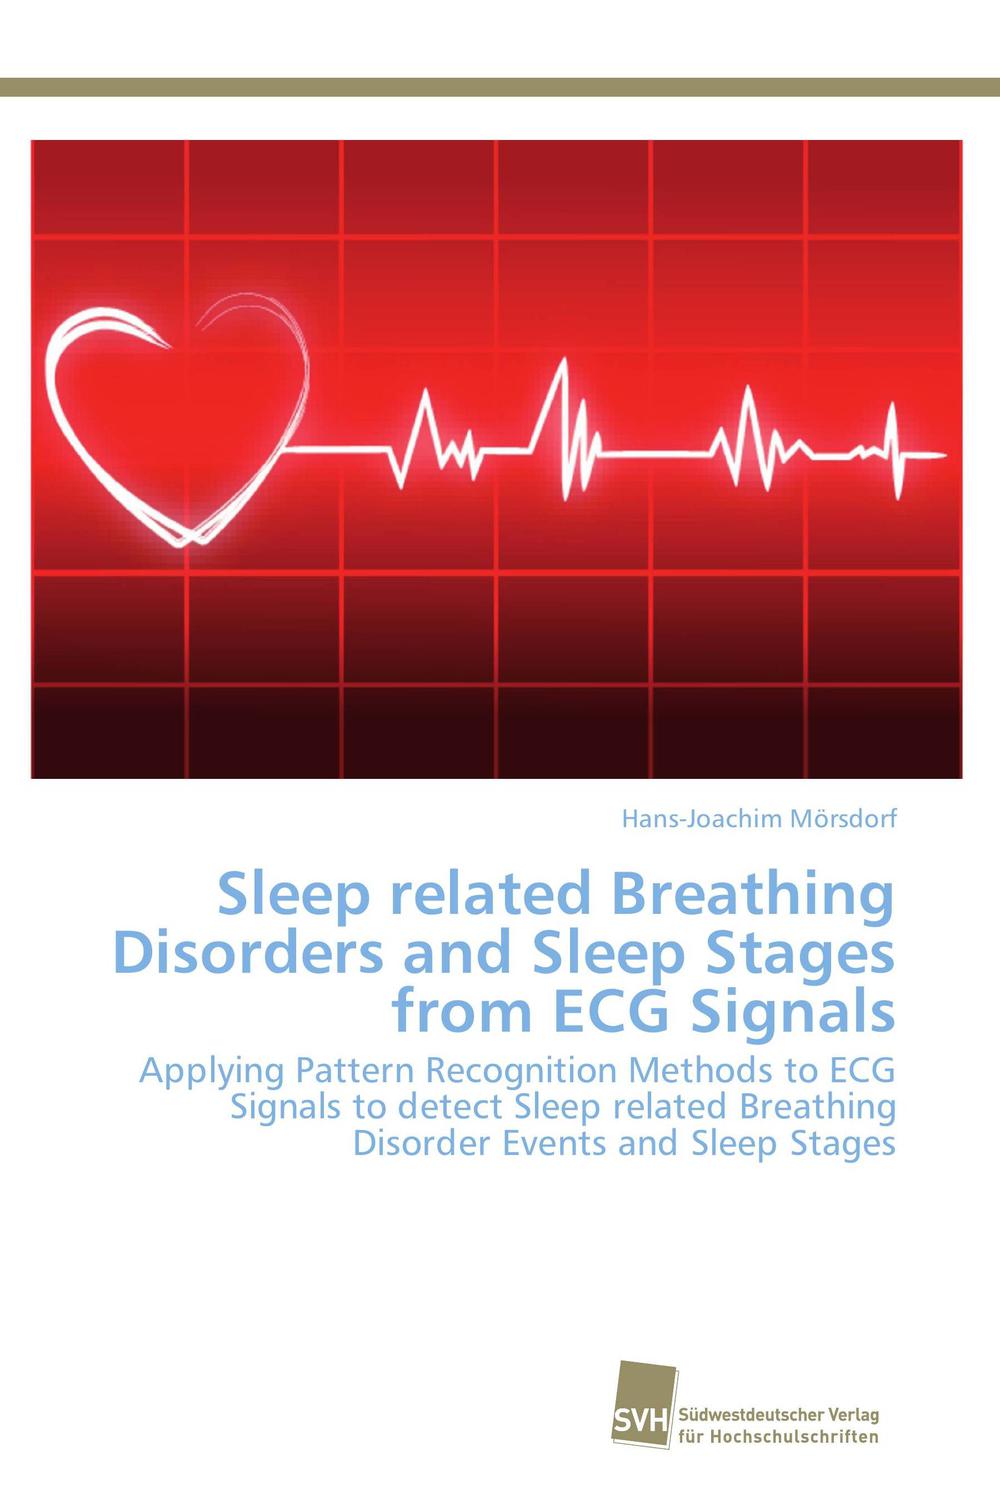 Sleep related Breathing Disorders and Sleep Stages from ECG Signals - Hans-Joachim Mörsdorf